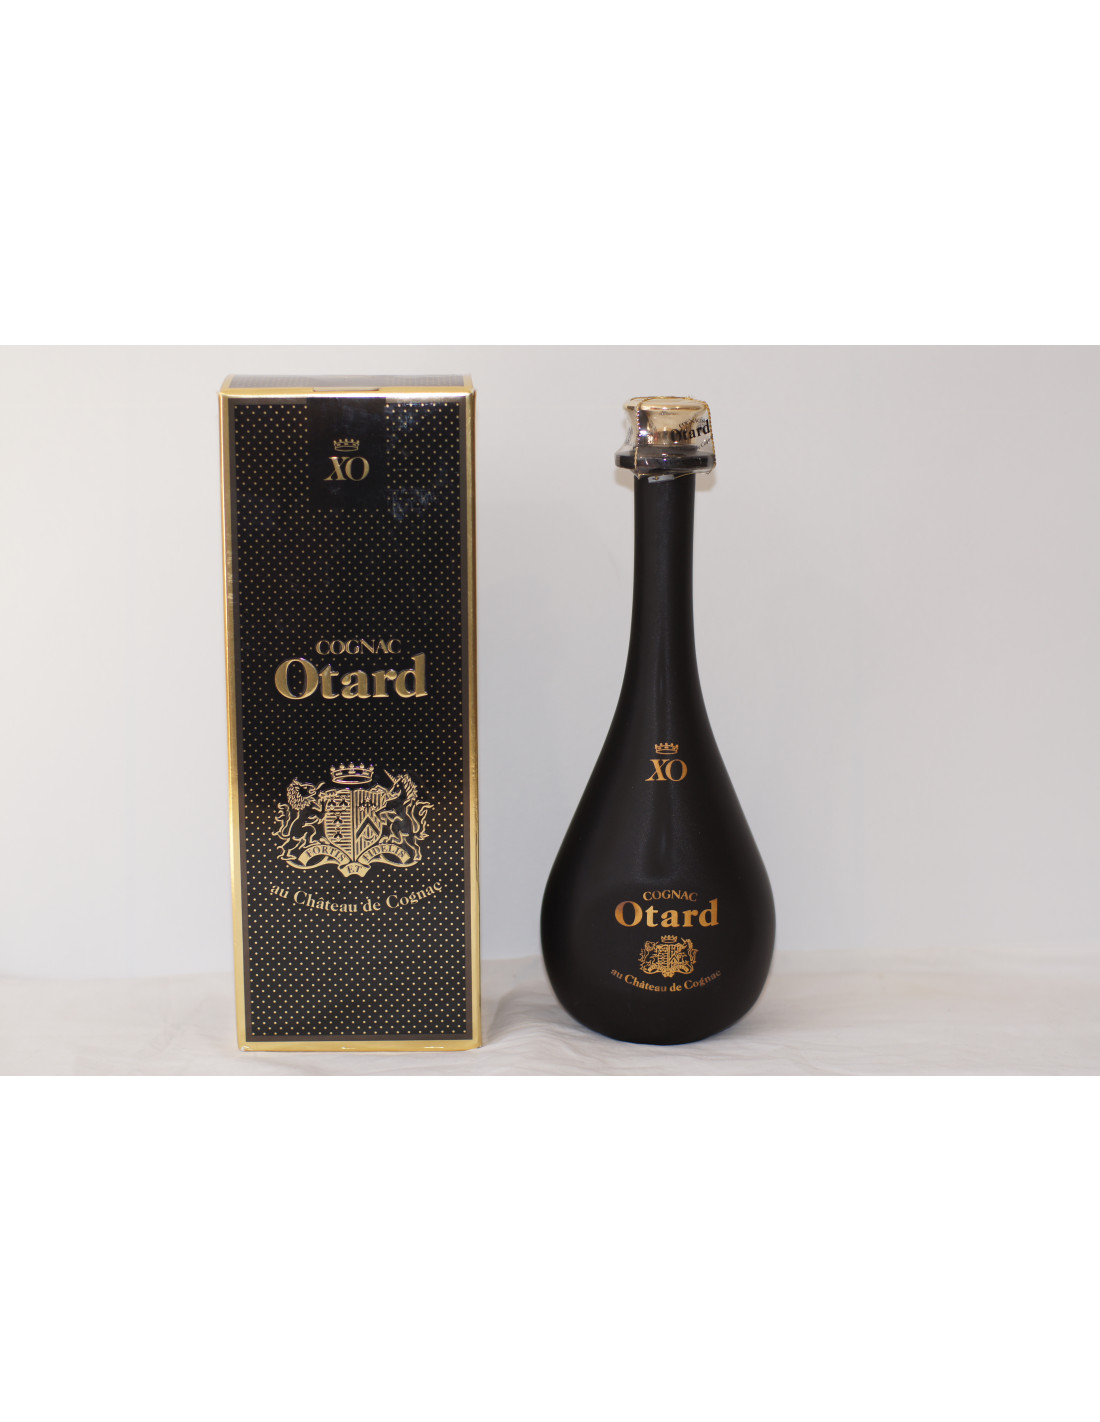 Croizet Cognac Grande Champagne Cognac XO 750 ML